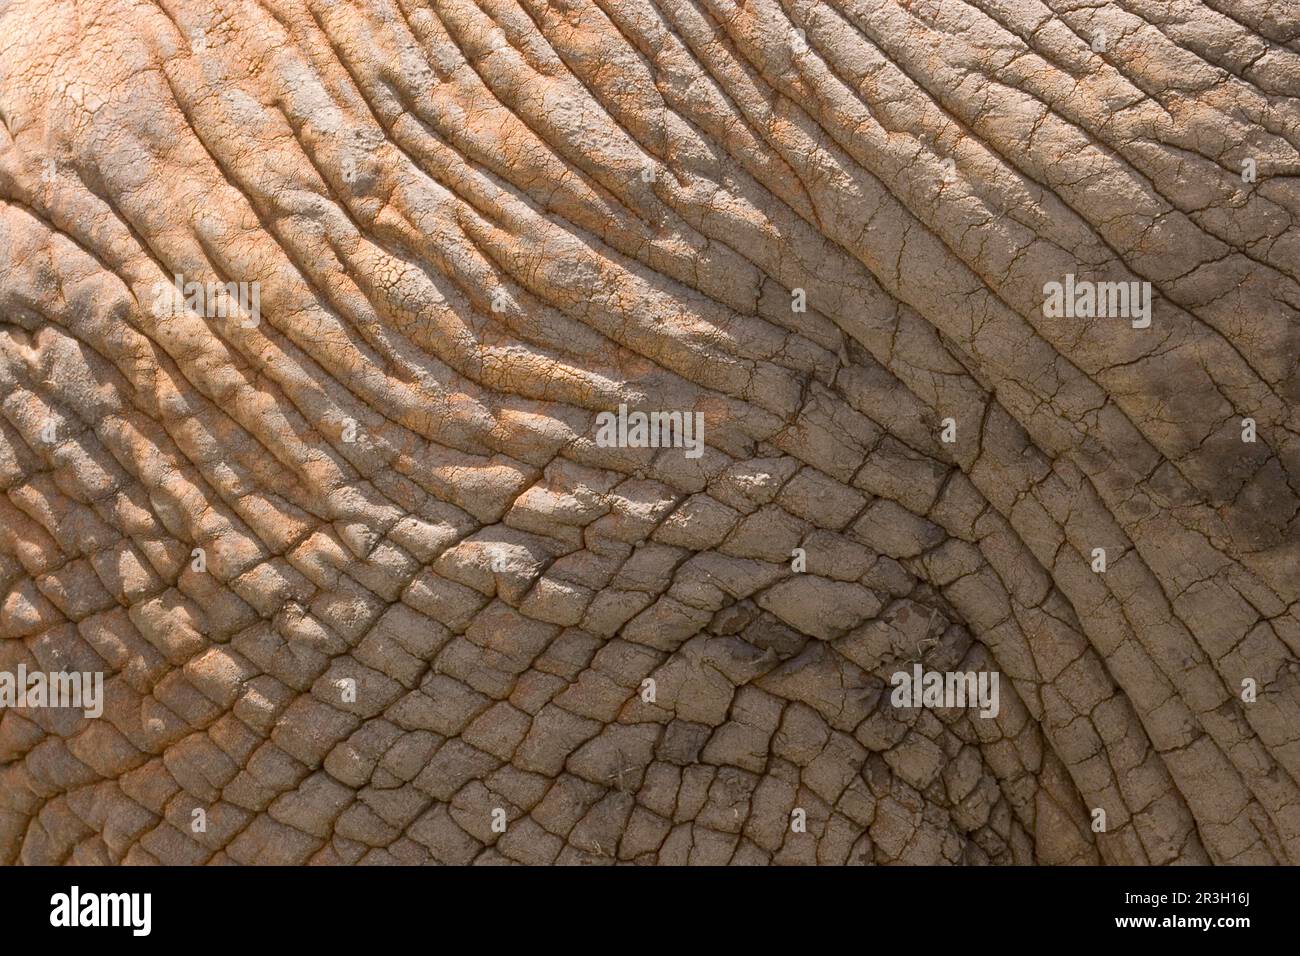 Afrikanischer Elefant (Loxodonta africana), Haut, Patten, Falten, Tierhaut, Hautdetail Stockfoto